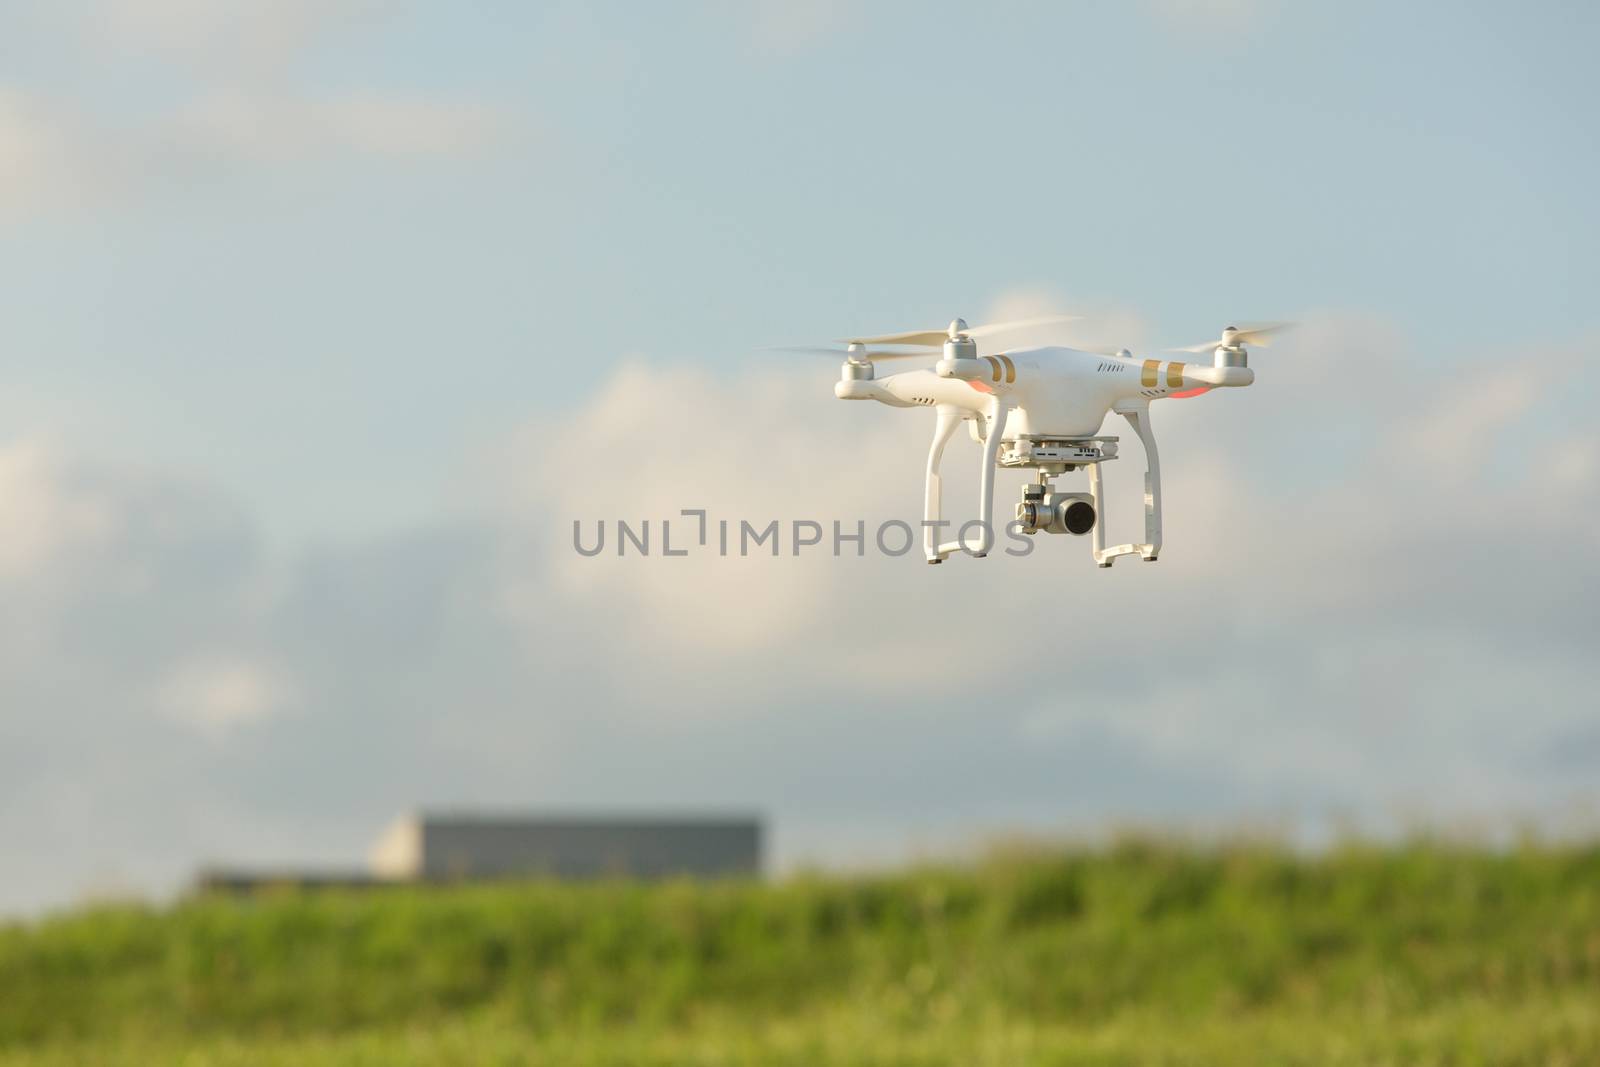 Camera drone quadrocoptor in mid air near building